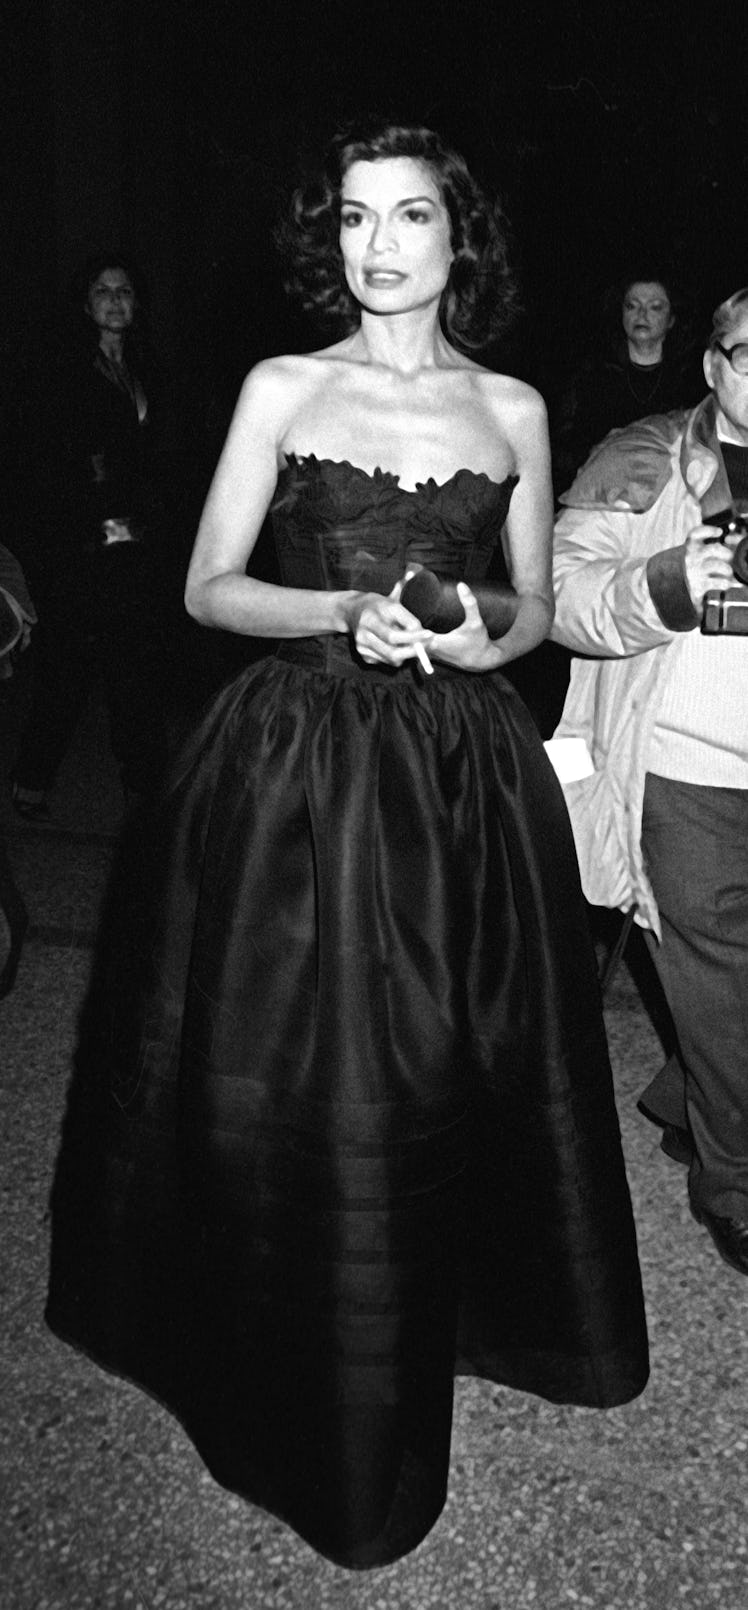 Bianca Jagger attends Metropolitan Museum of Art Costume Institute Gala "The 18th Century Woman"